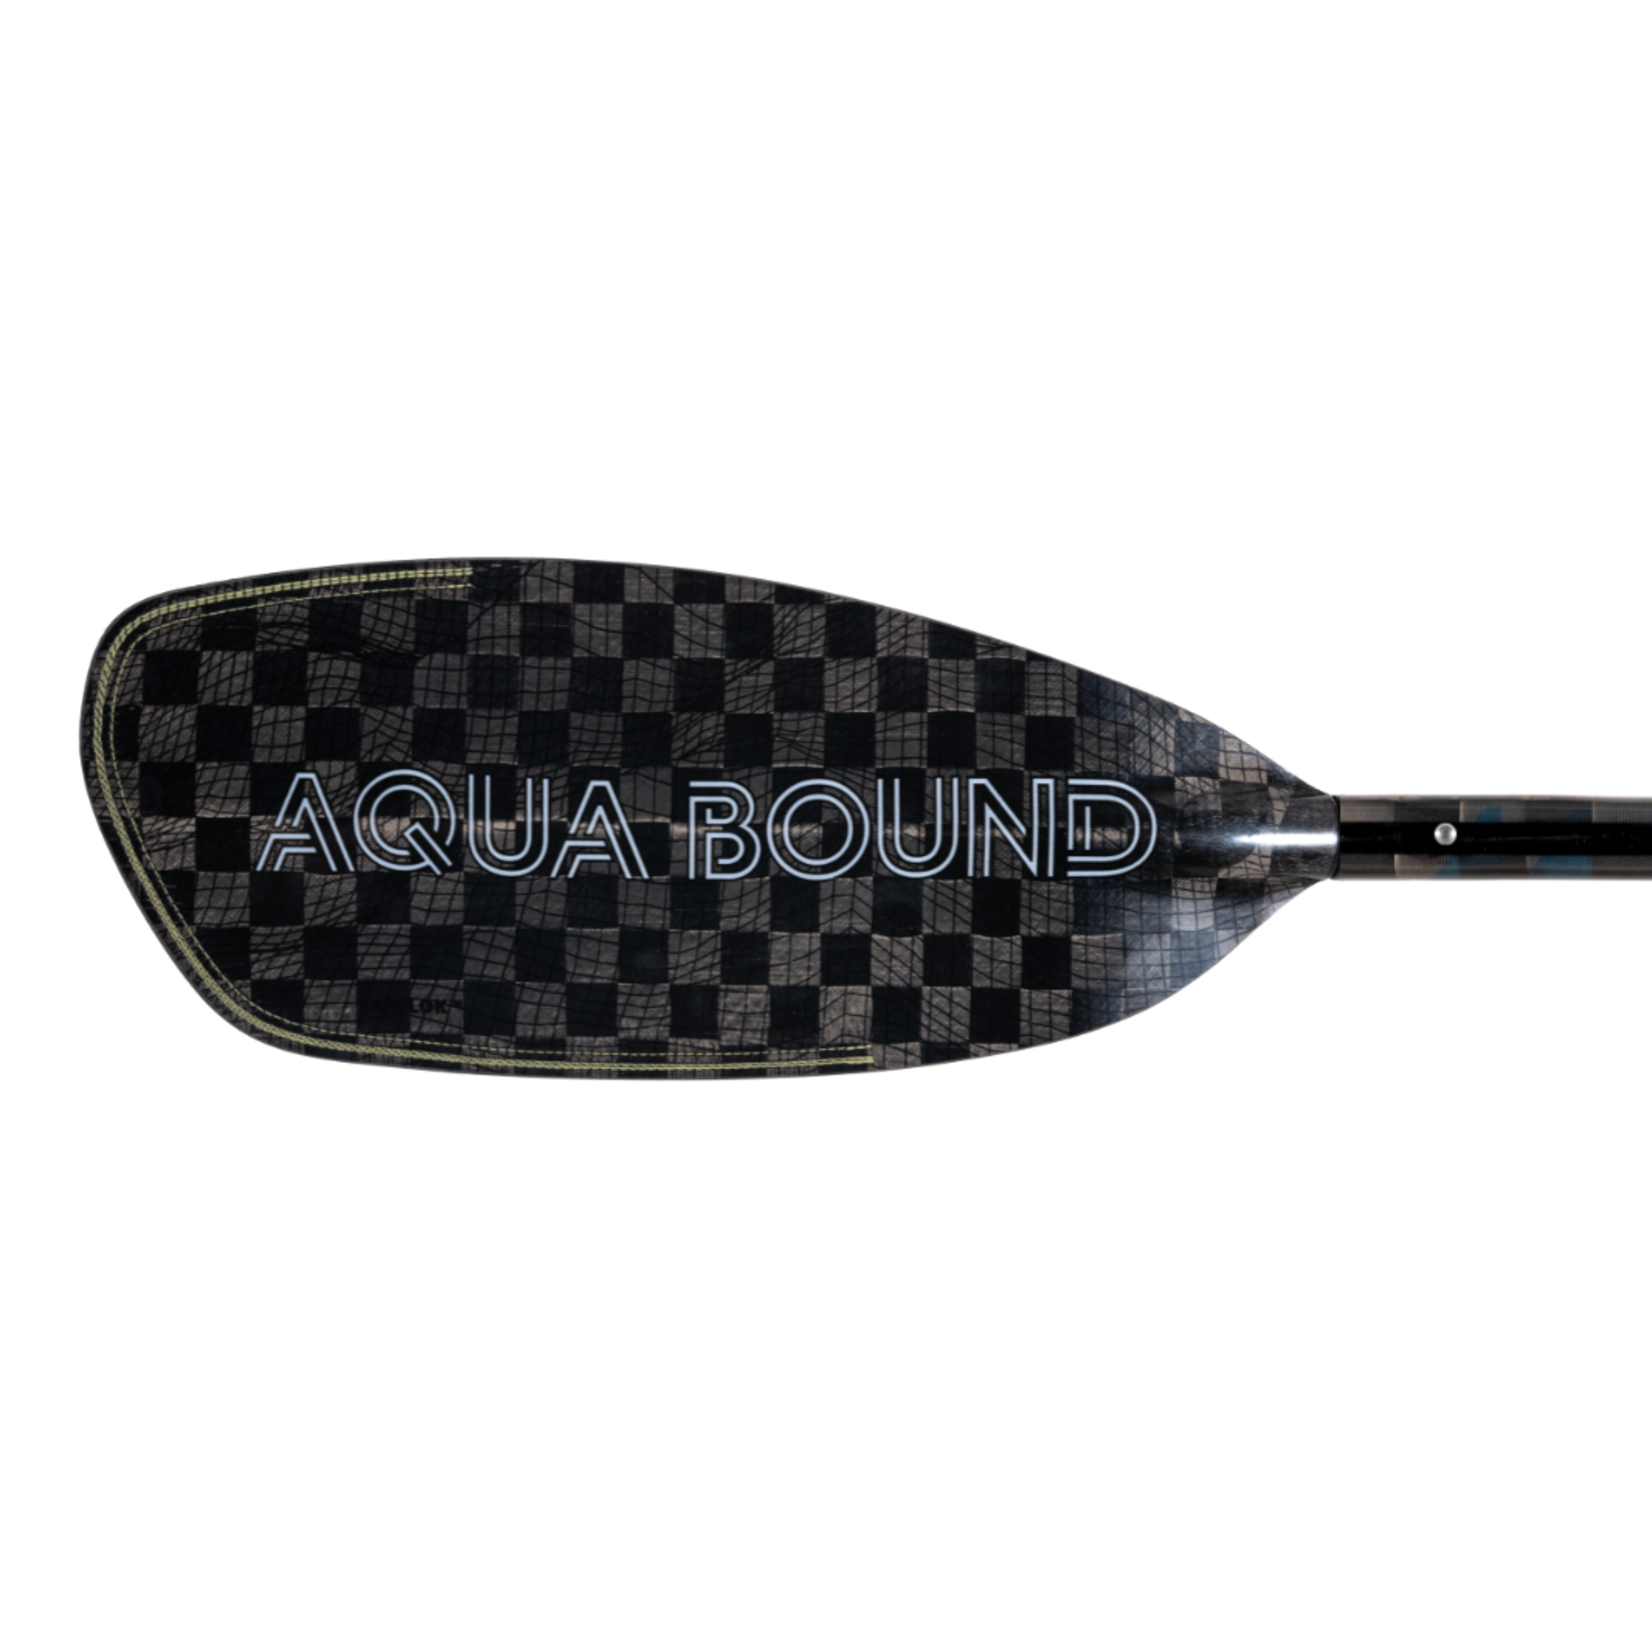 Aqua Bound Aqua Bound Aerial Minor Carbon 4-Piece Versa-Lok Straight Shaft Kayak Paddle